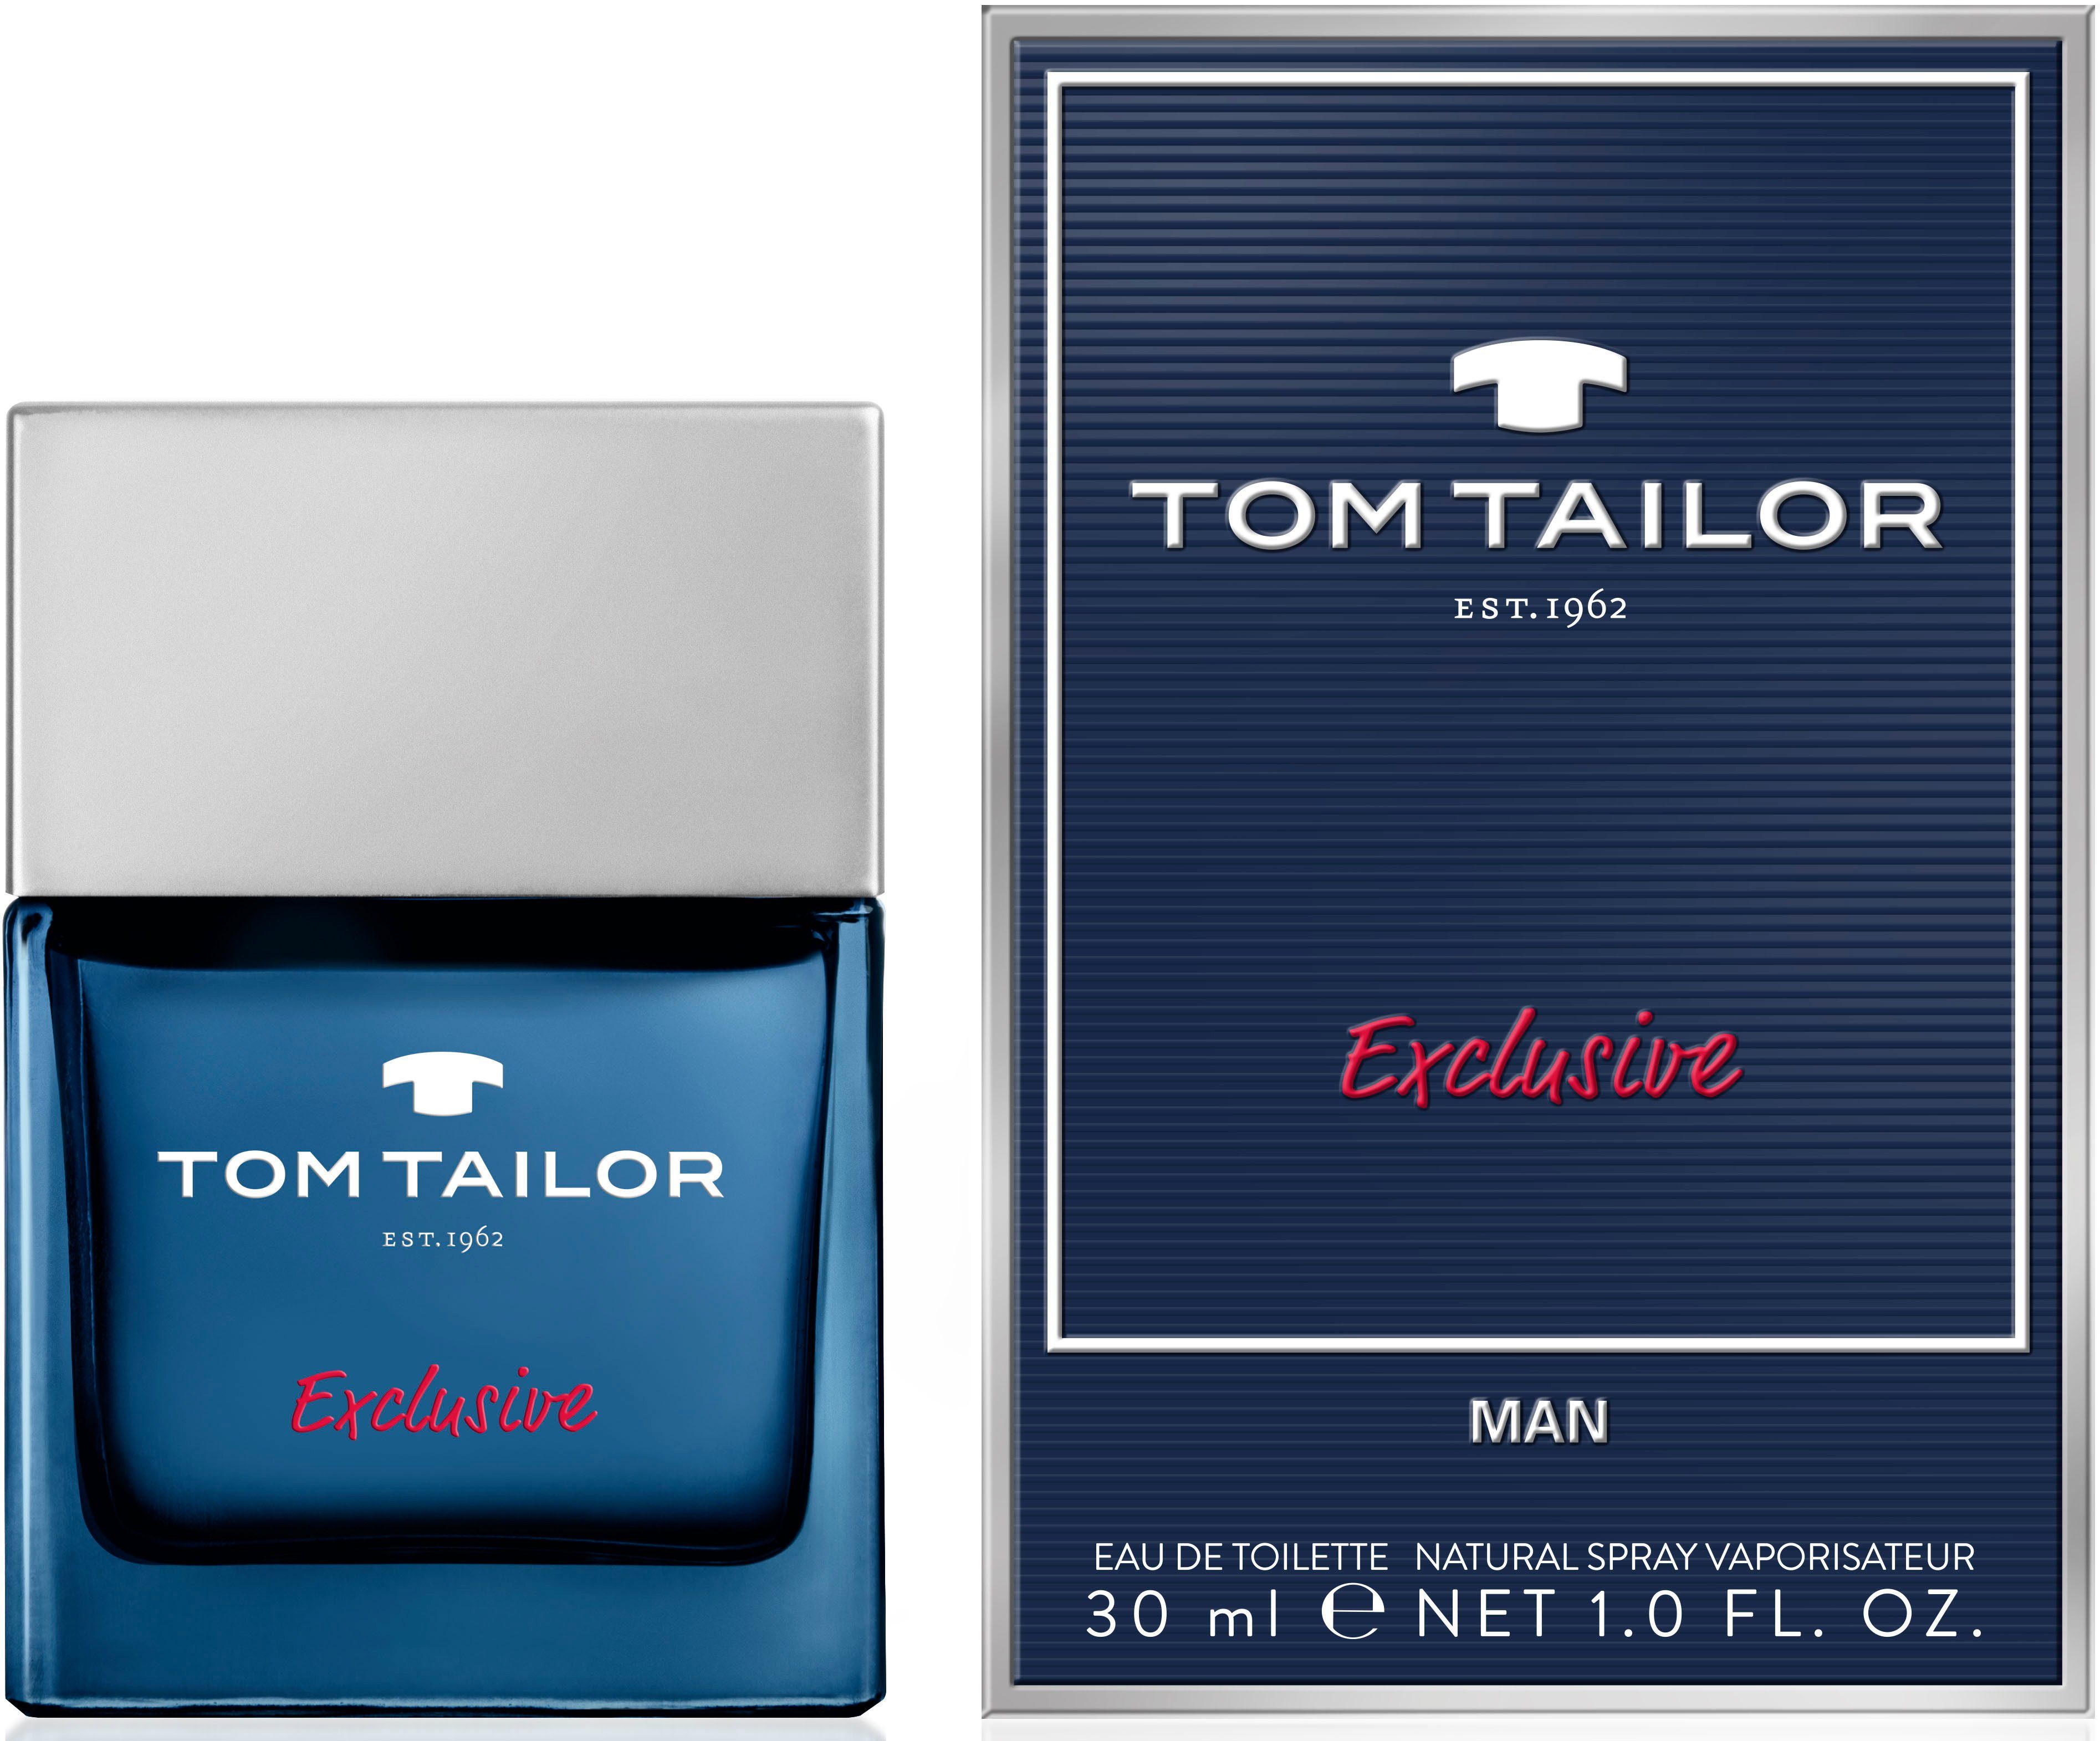 Günstiger Versandfachhandel! Man TAILOR Exclusive de Tailor Toilette Eau TOM Tom